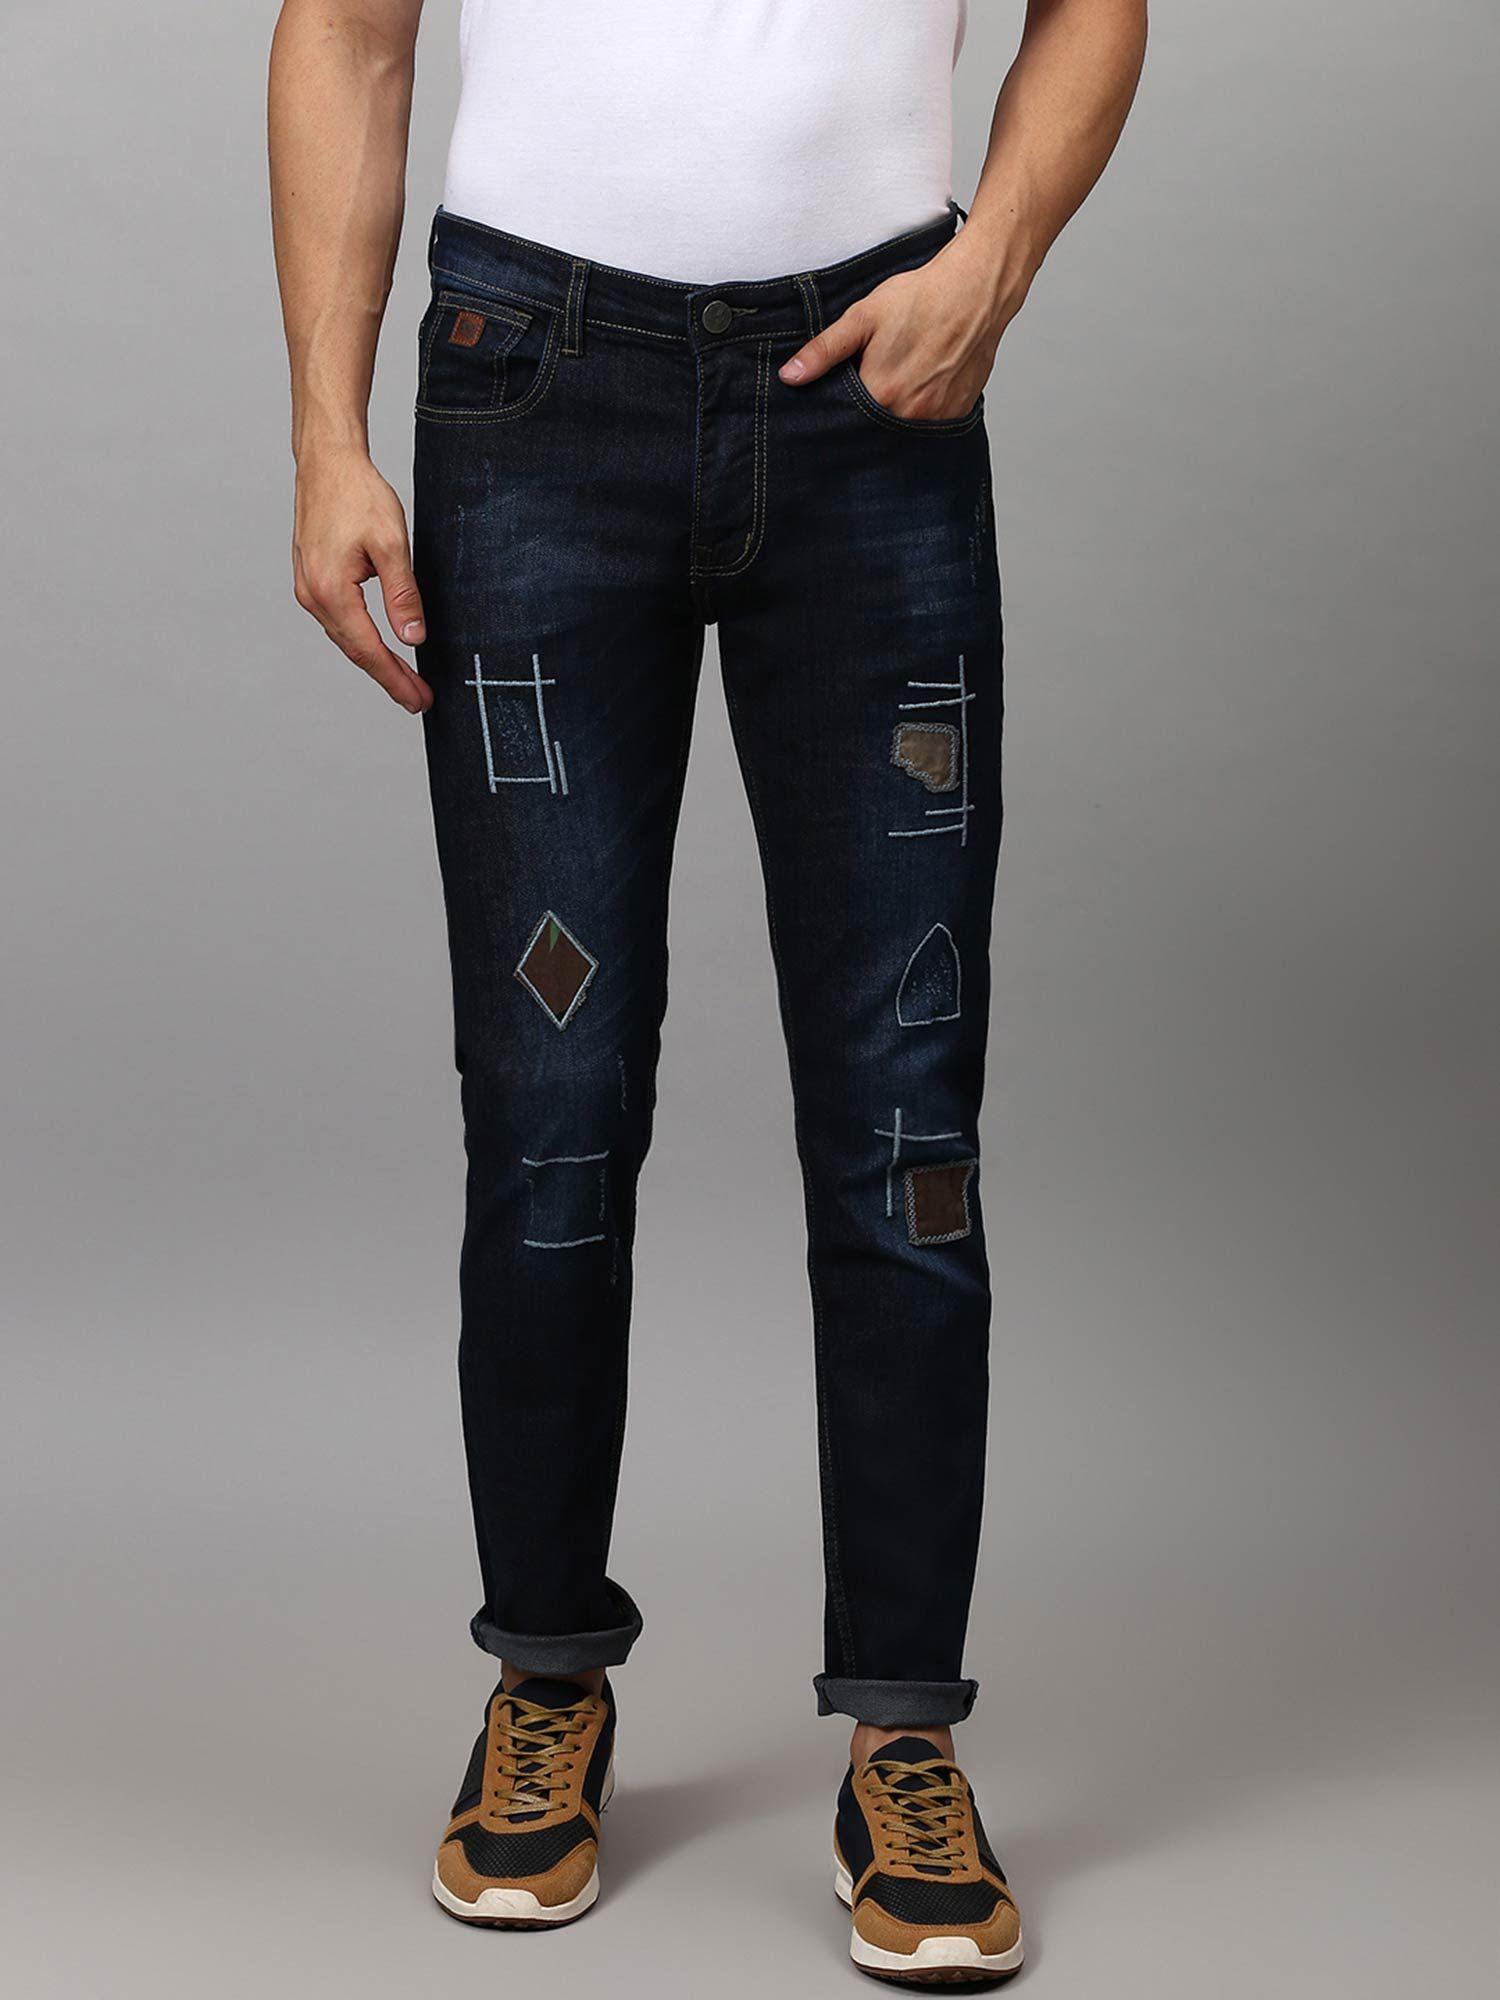 men-front-type-stylish-casual-denim-jeans